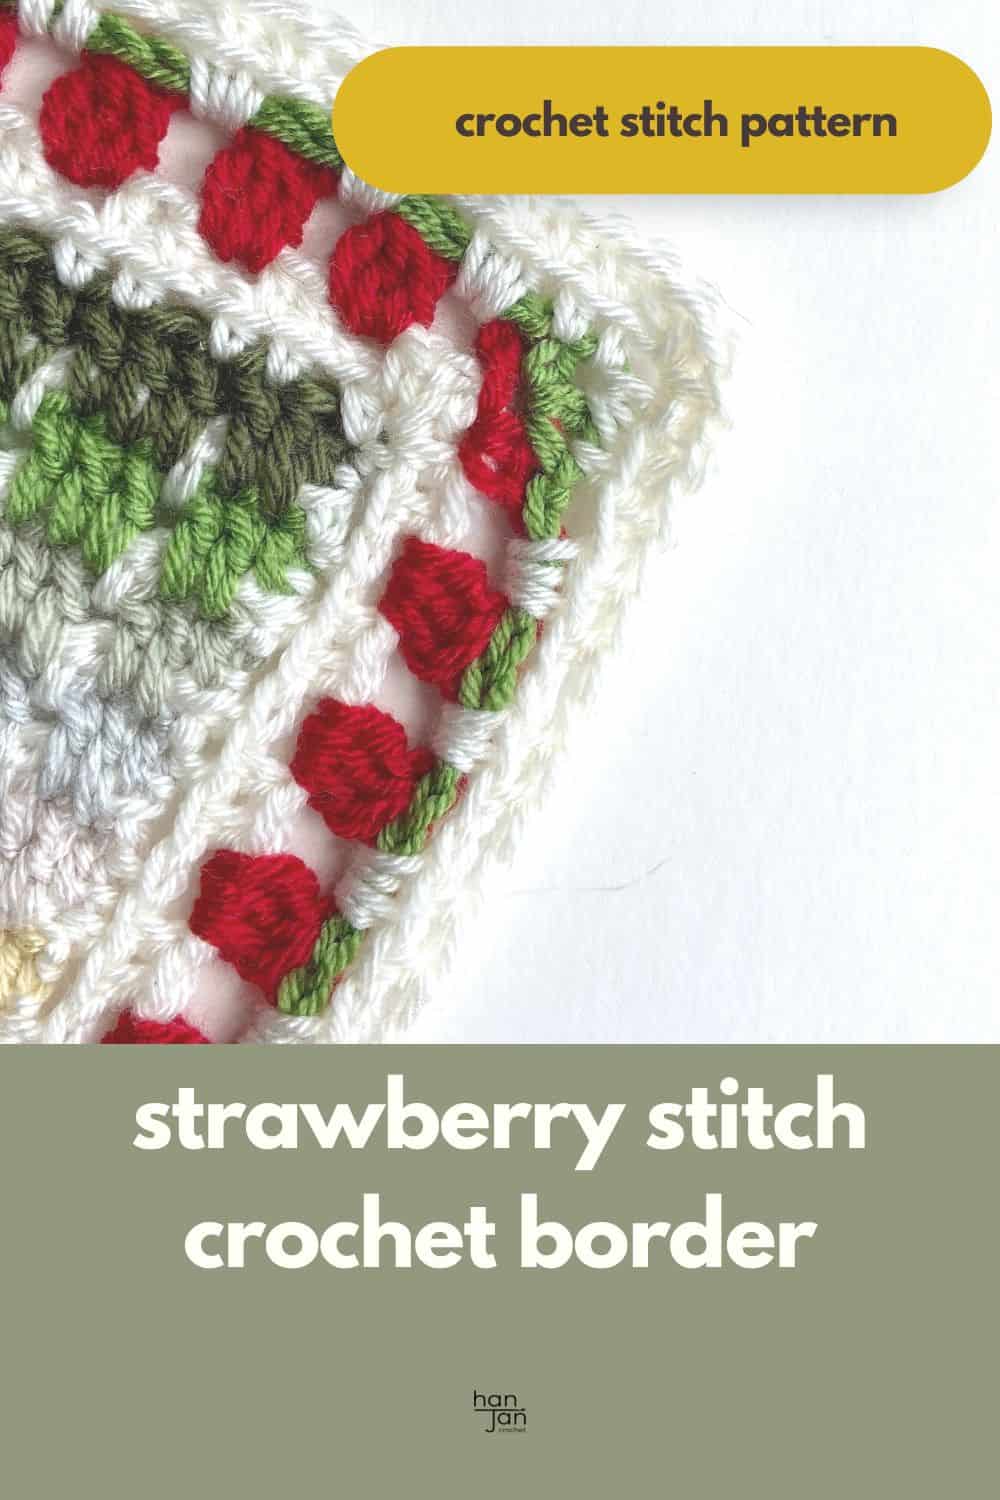 Strawberry stitch crochet border pattern.